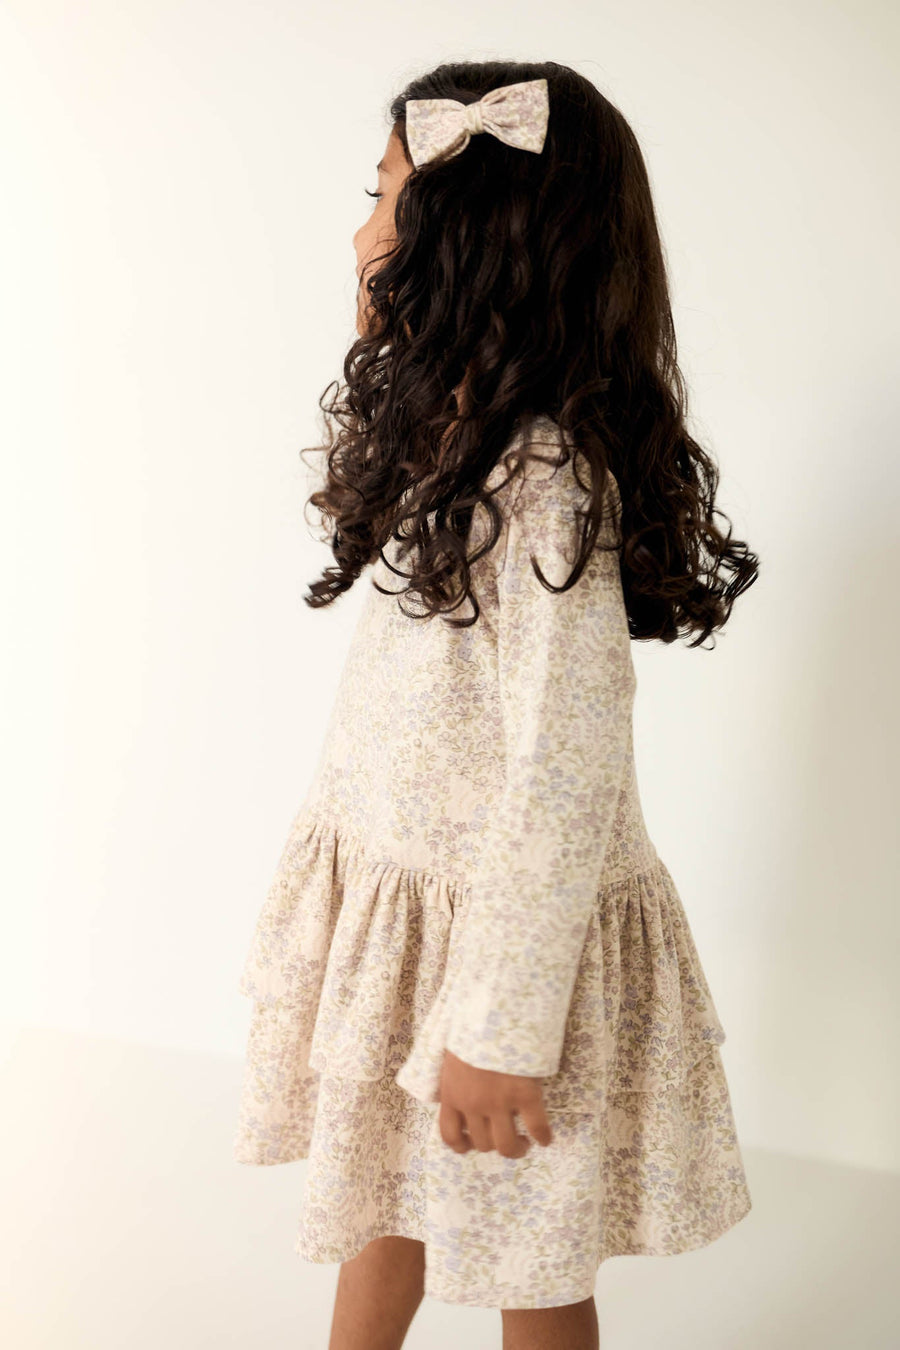 Organic Cotton Fayette Dress - April Floral Mauve Childrens Dress from Jamie Kay USA